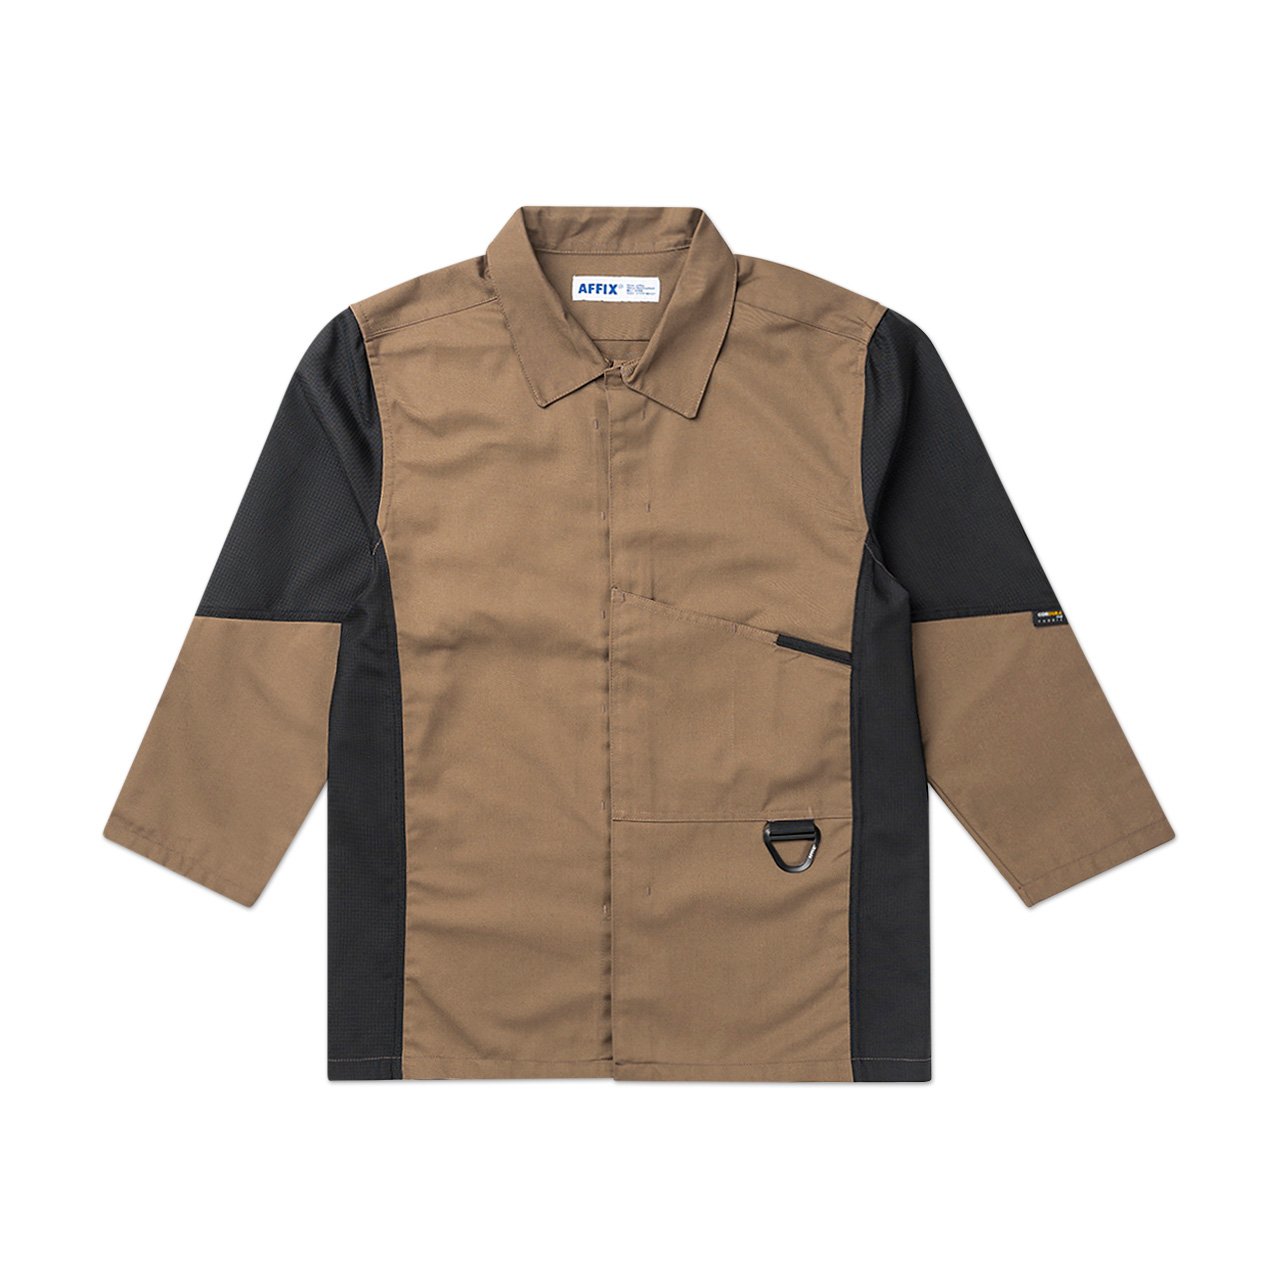 affix duo-tone work shirt (tan / black) - aw20t03 - a.plus - Image - 1